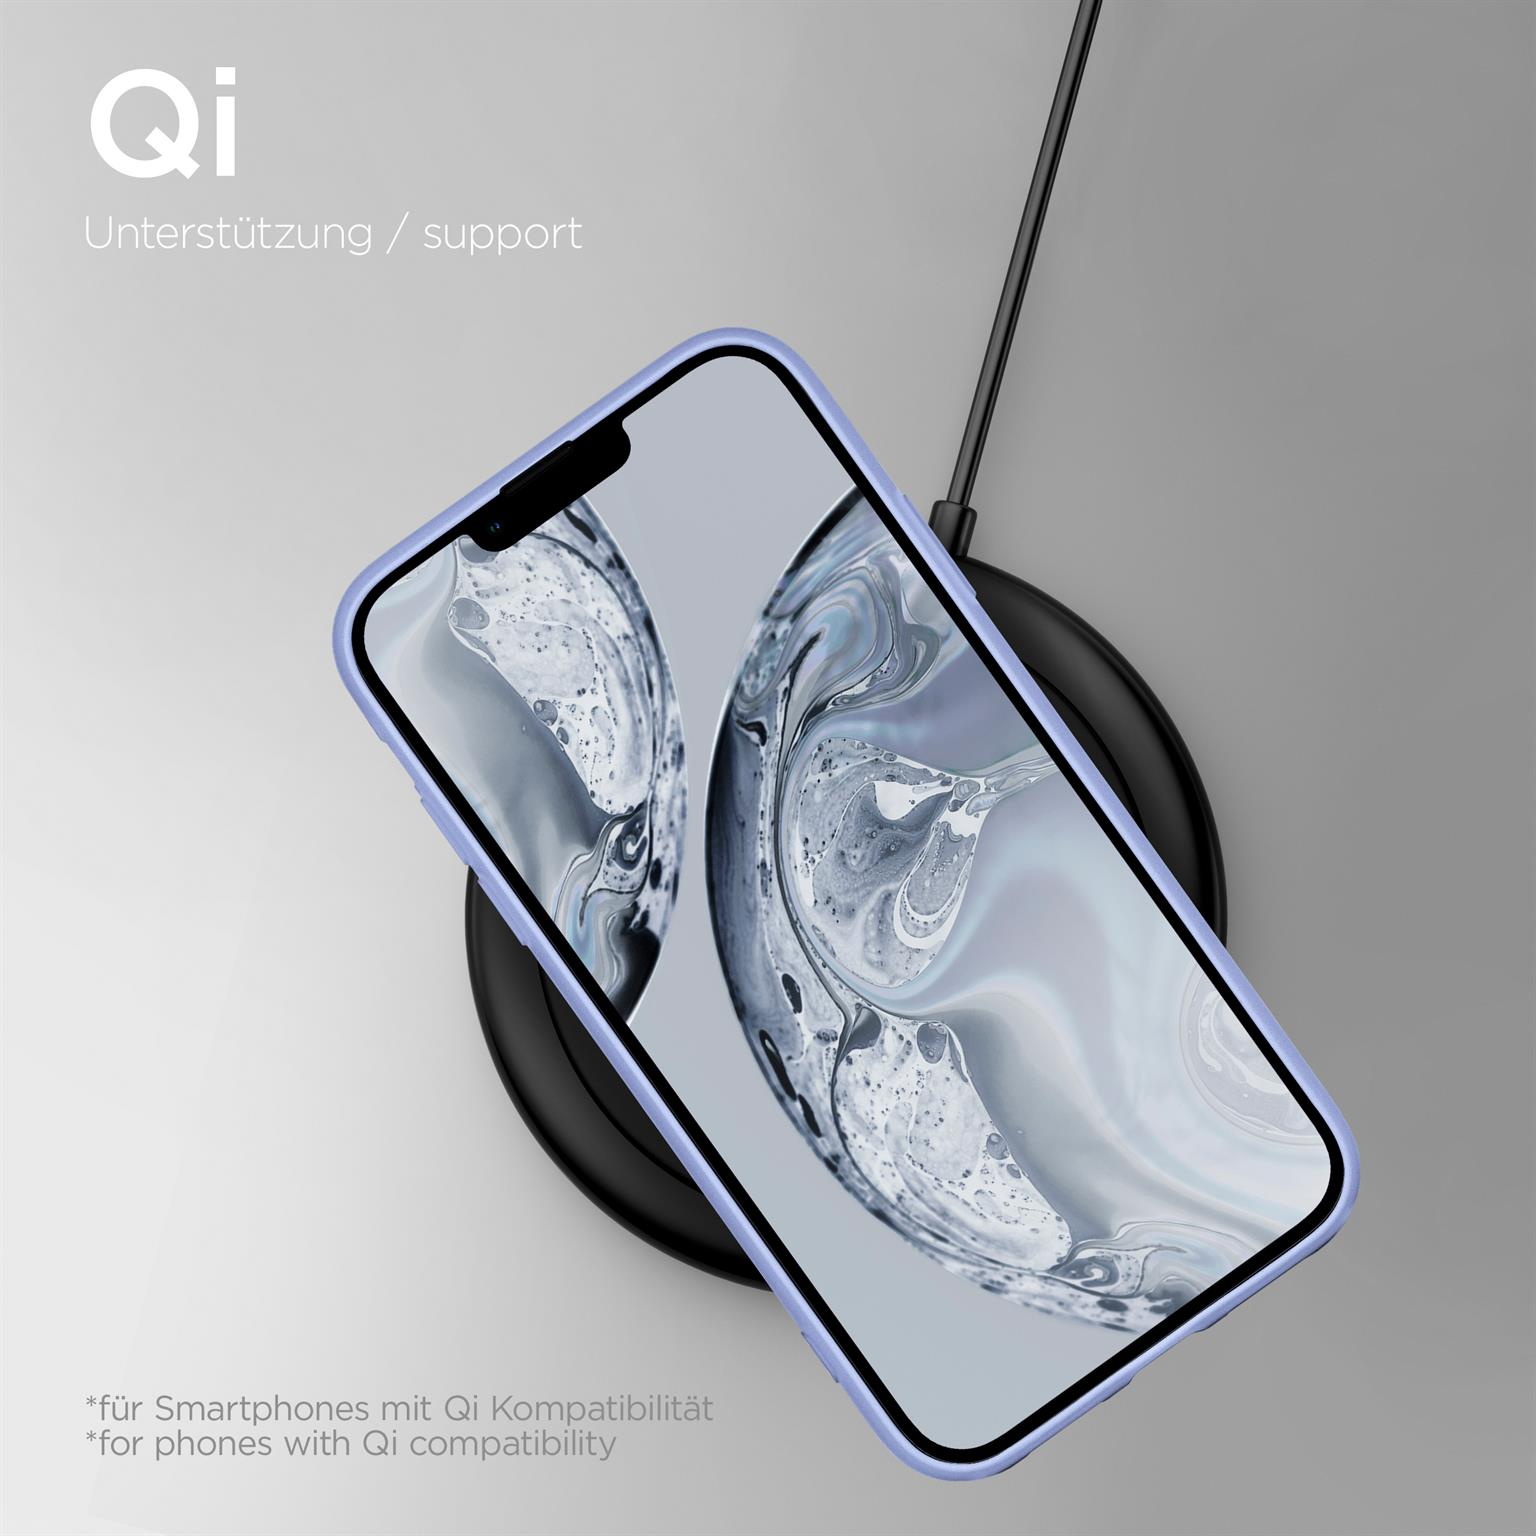 ONEFLOW Soft 14, Backcover, Himmelblau iPhone Case, Apple